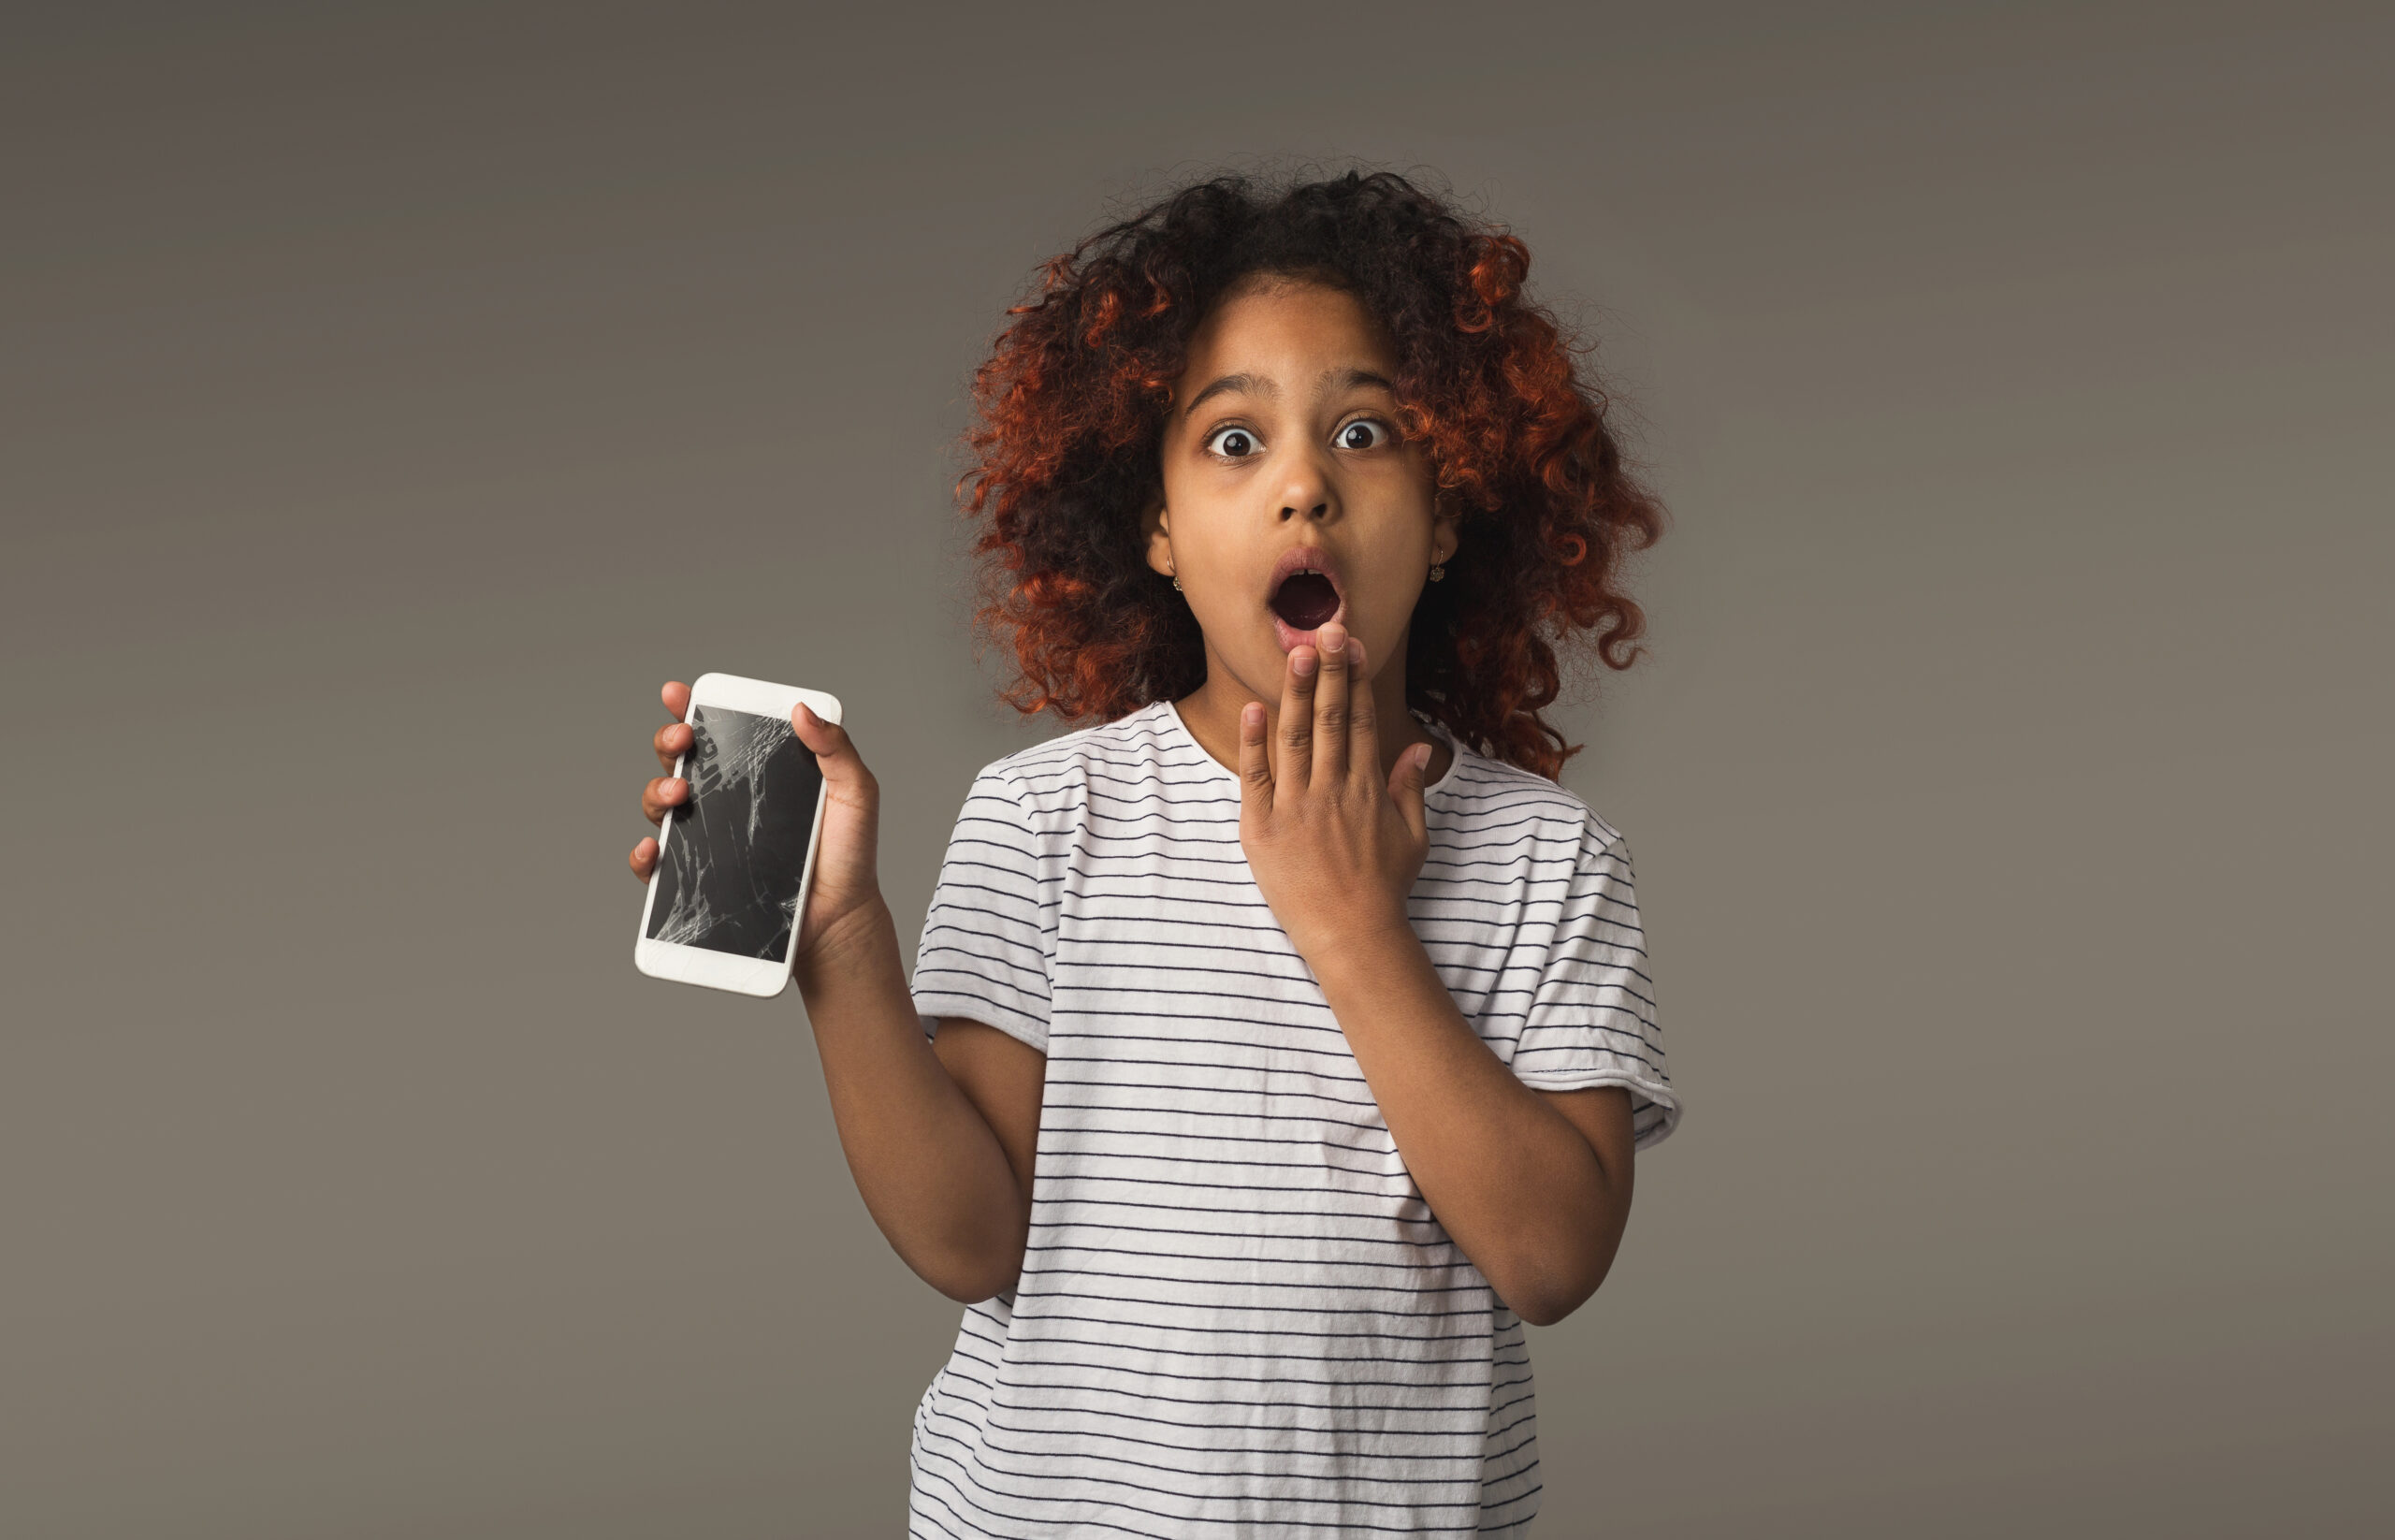 Young girl with broken smartphone